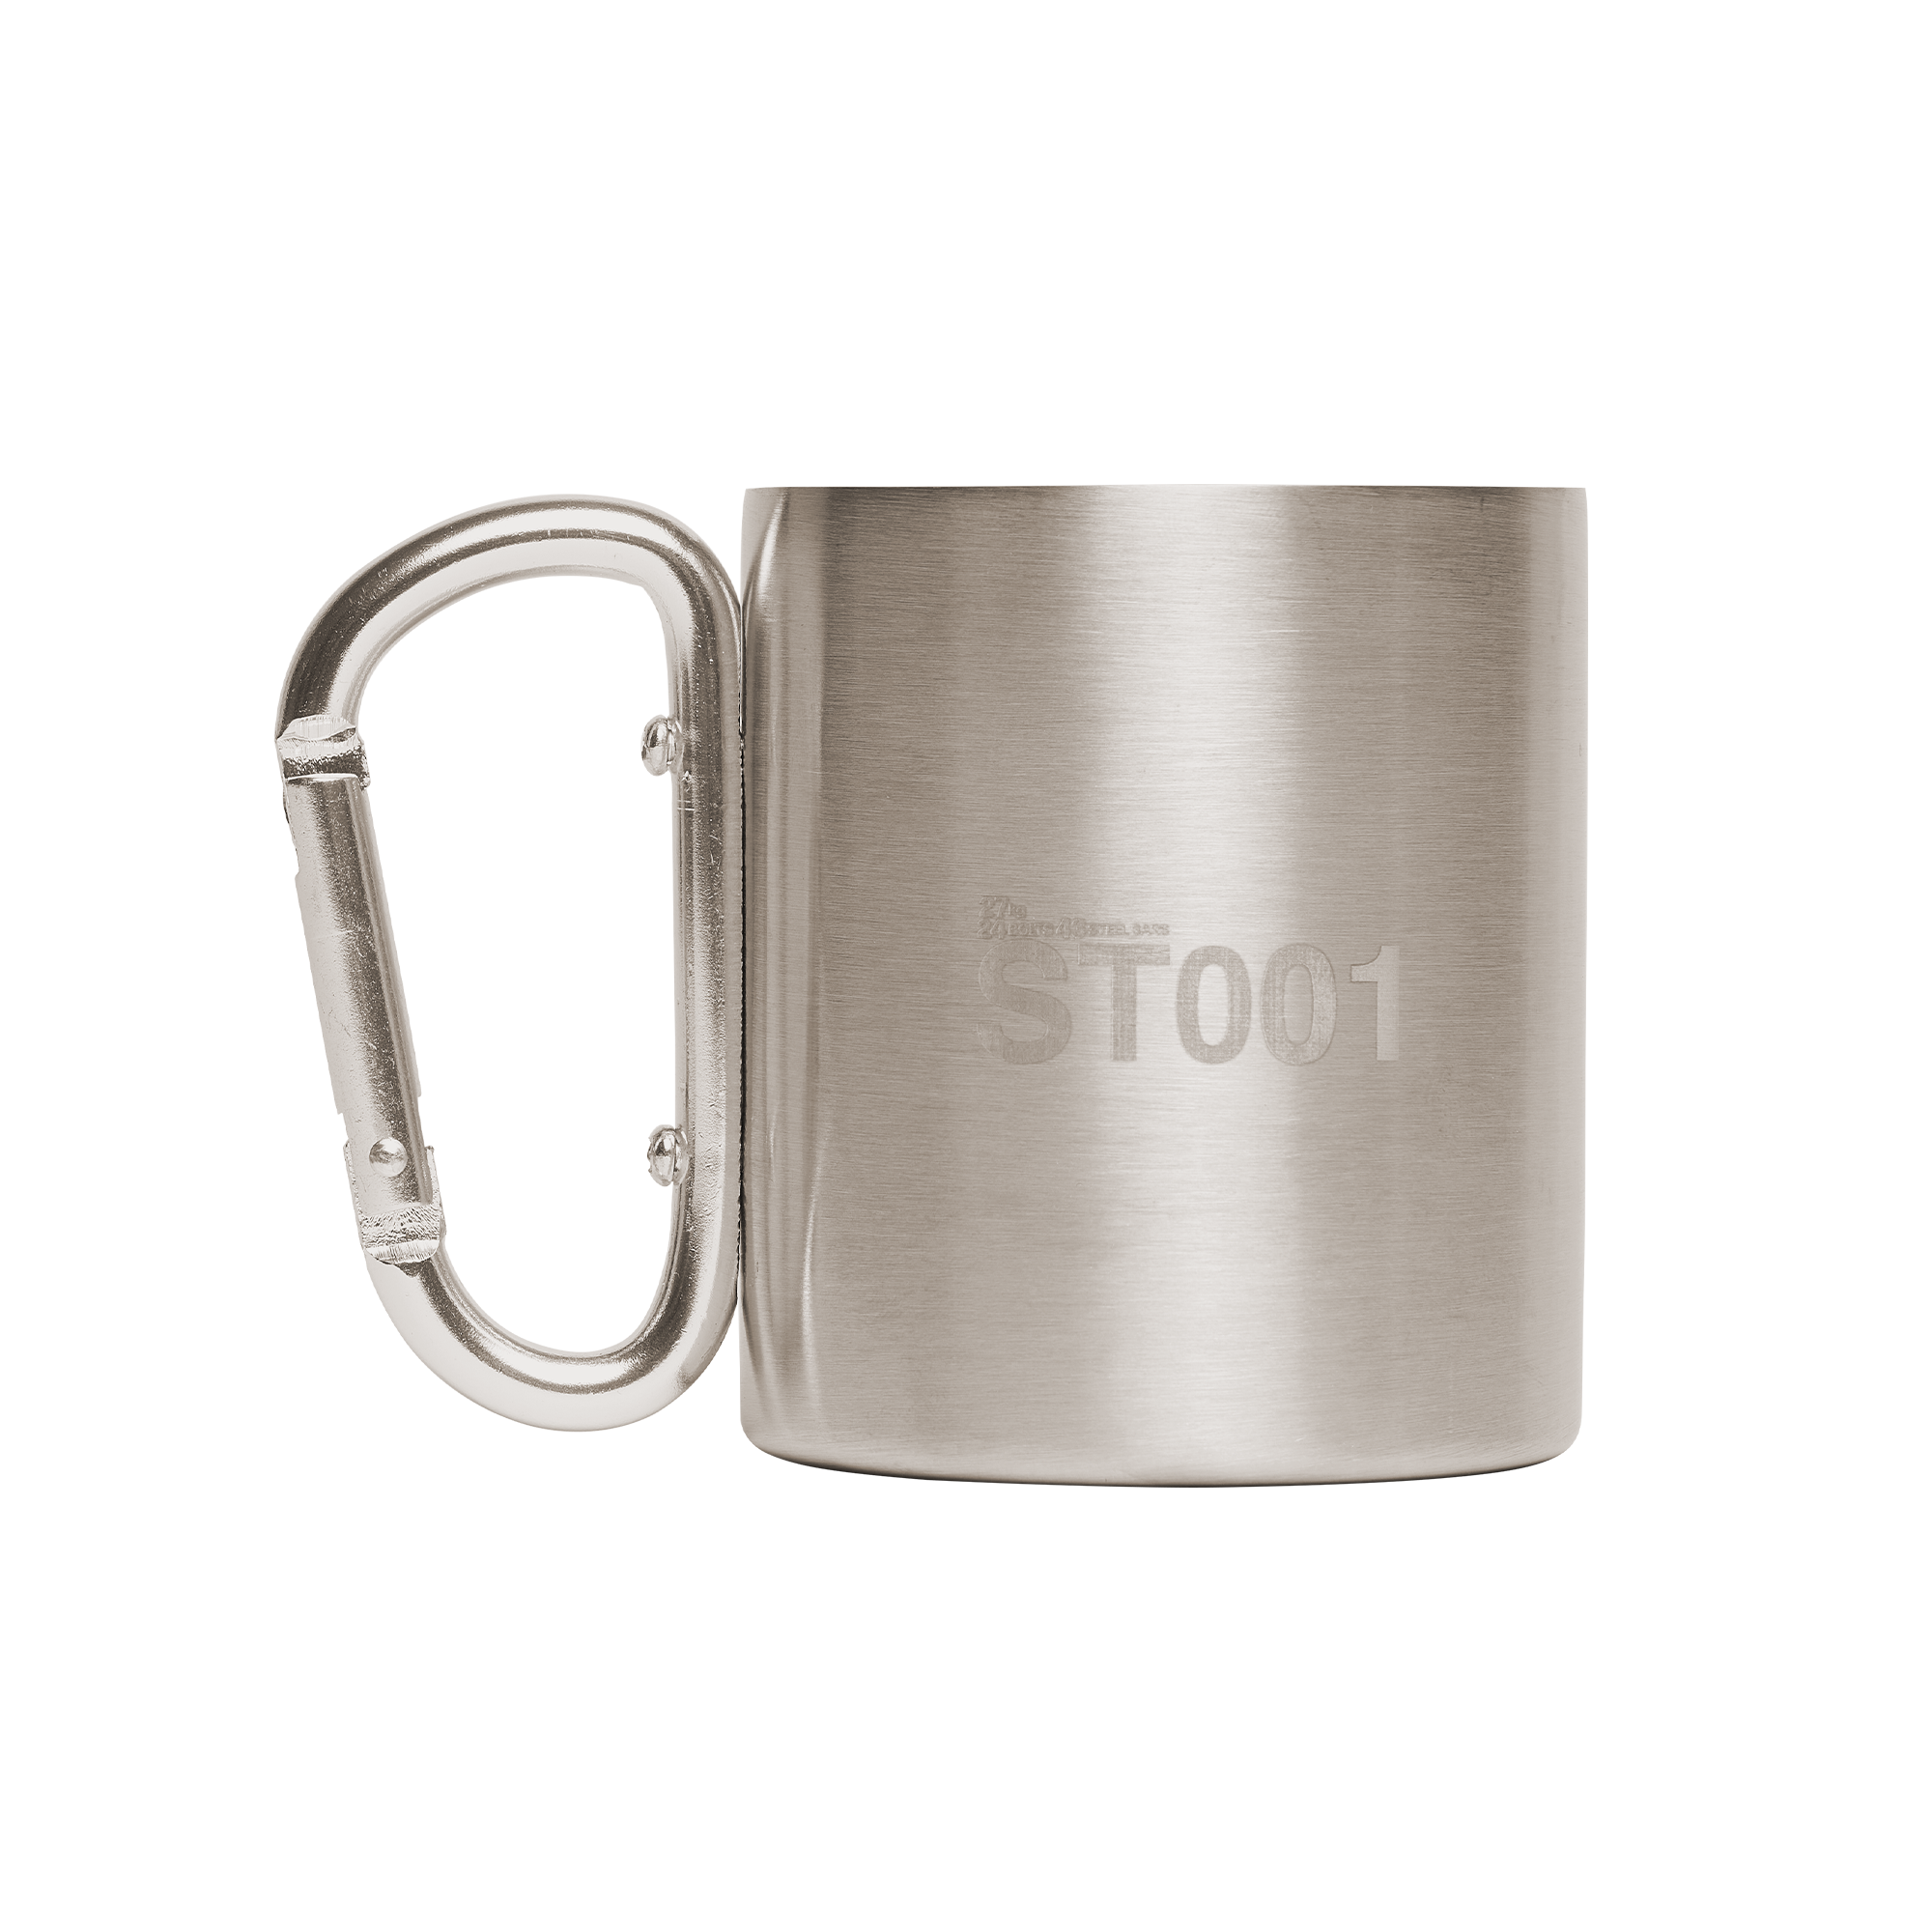 ST001 isolating mug special edition